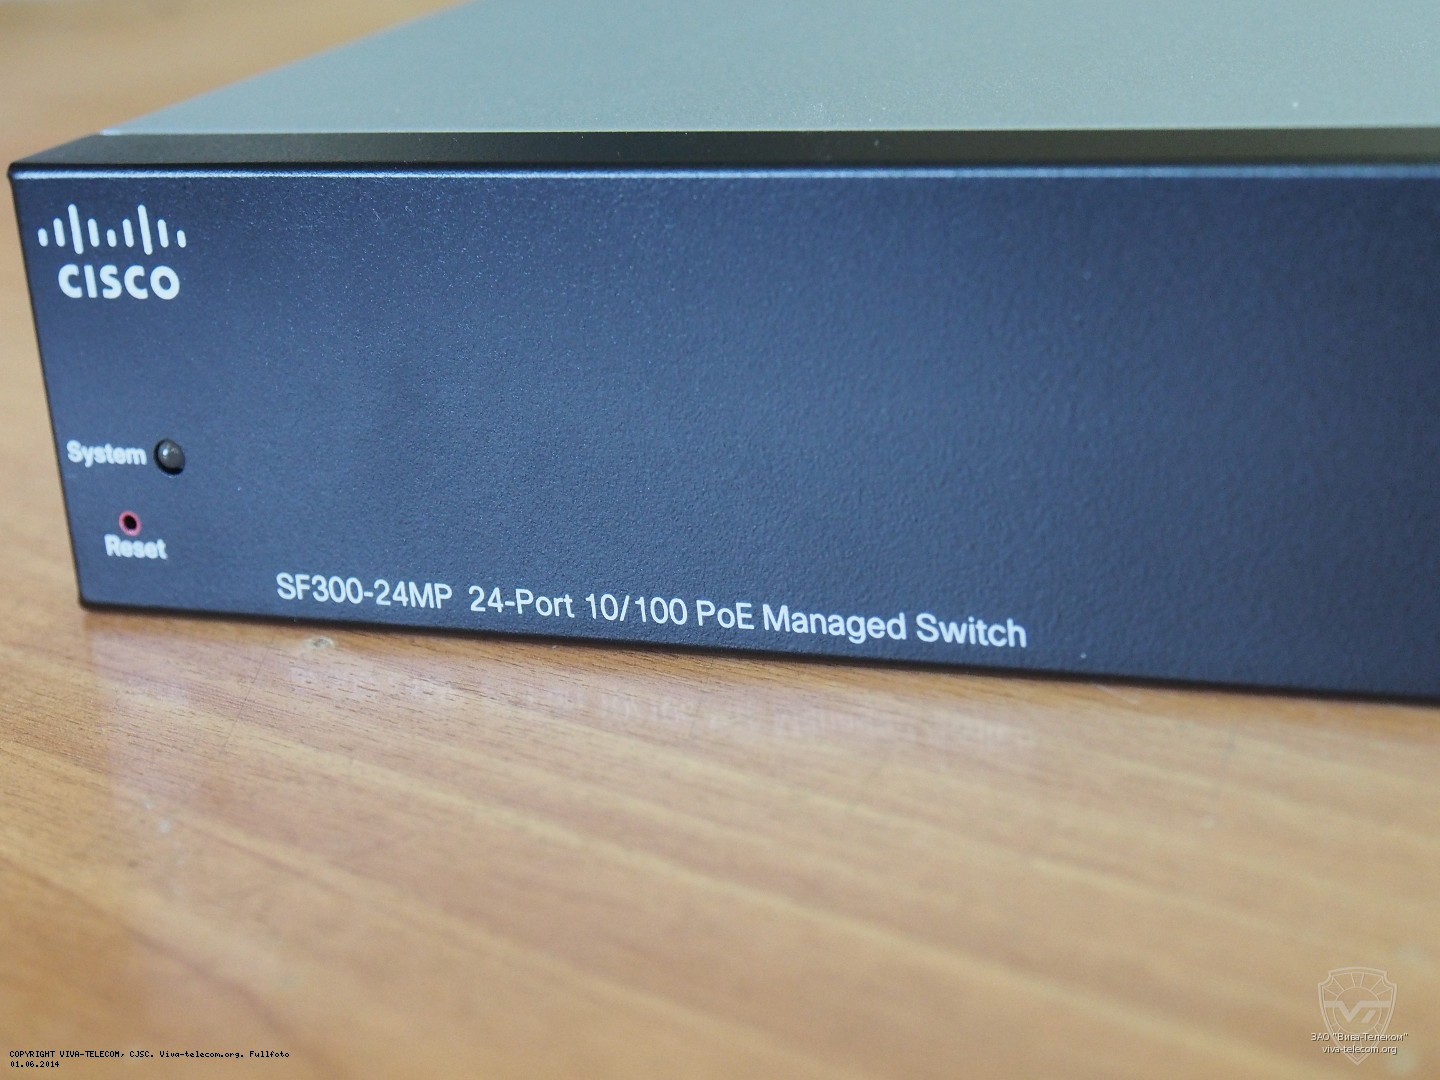    Cisco SF300-24MP